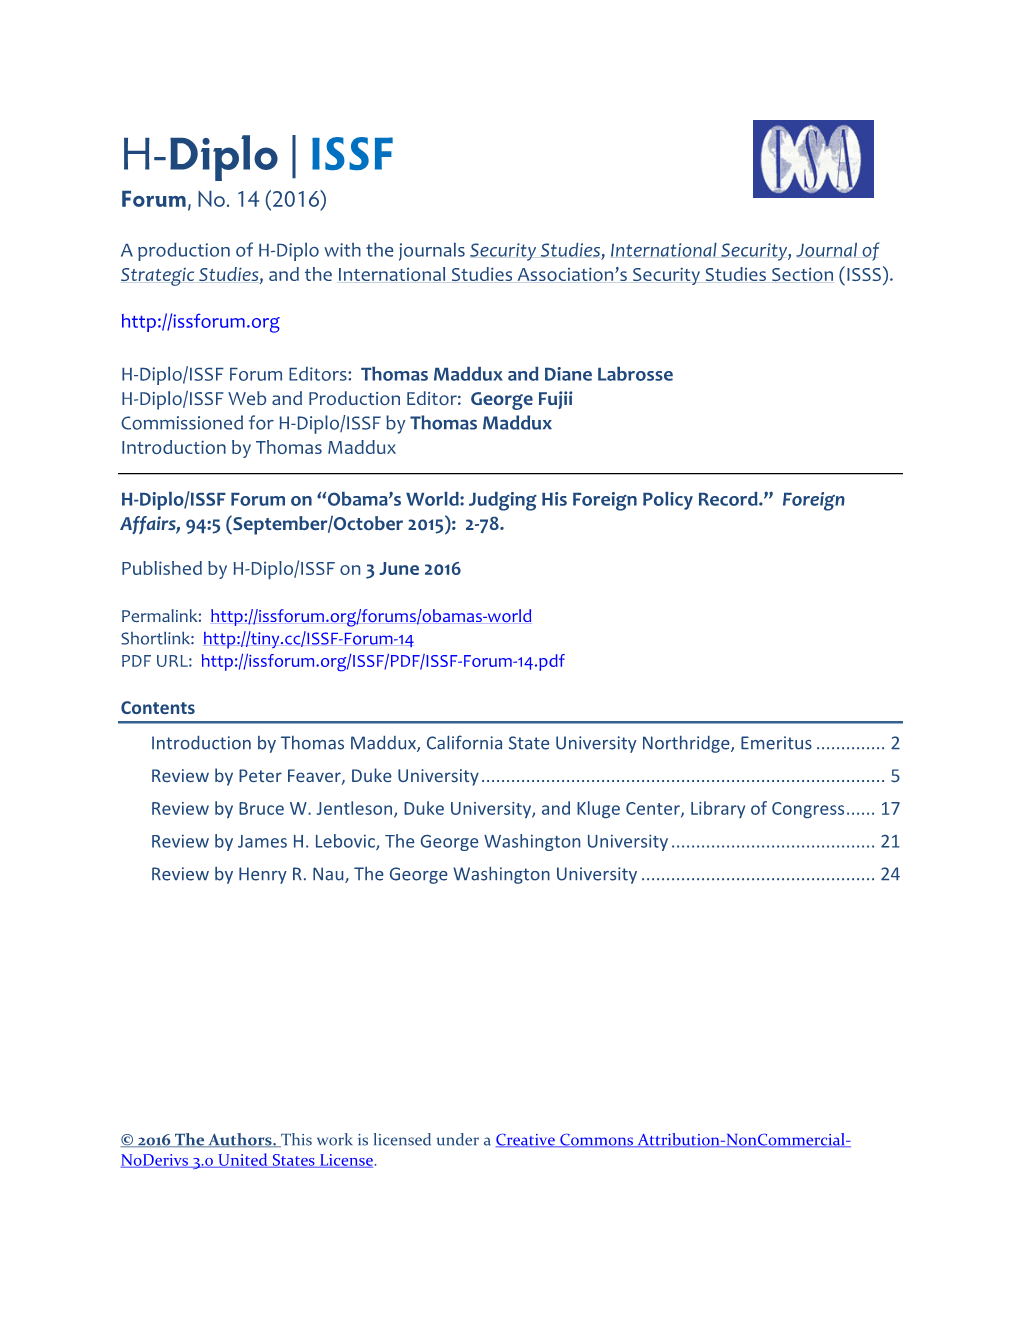 H-Diplo/ISSF Forum, No. 13 (2016)